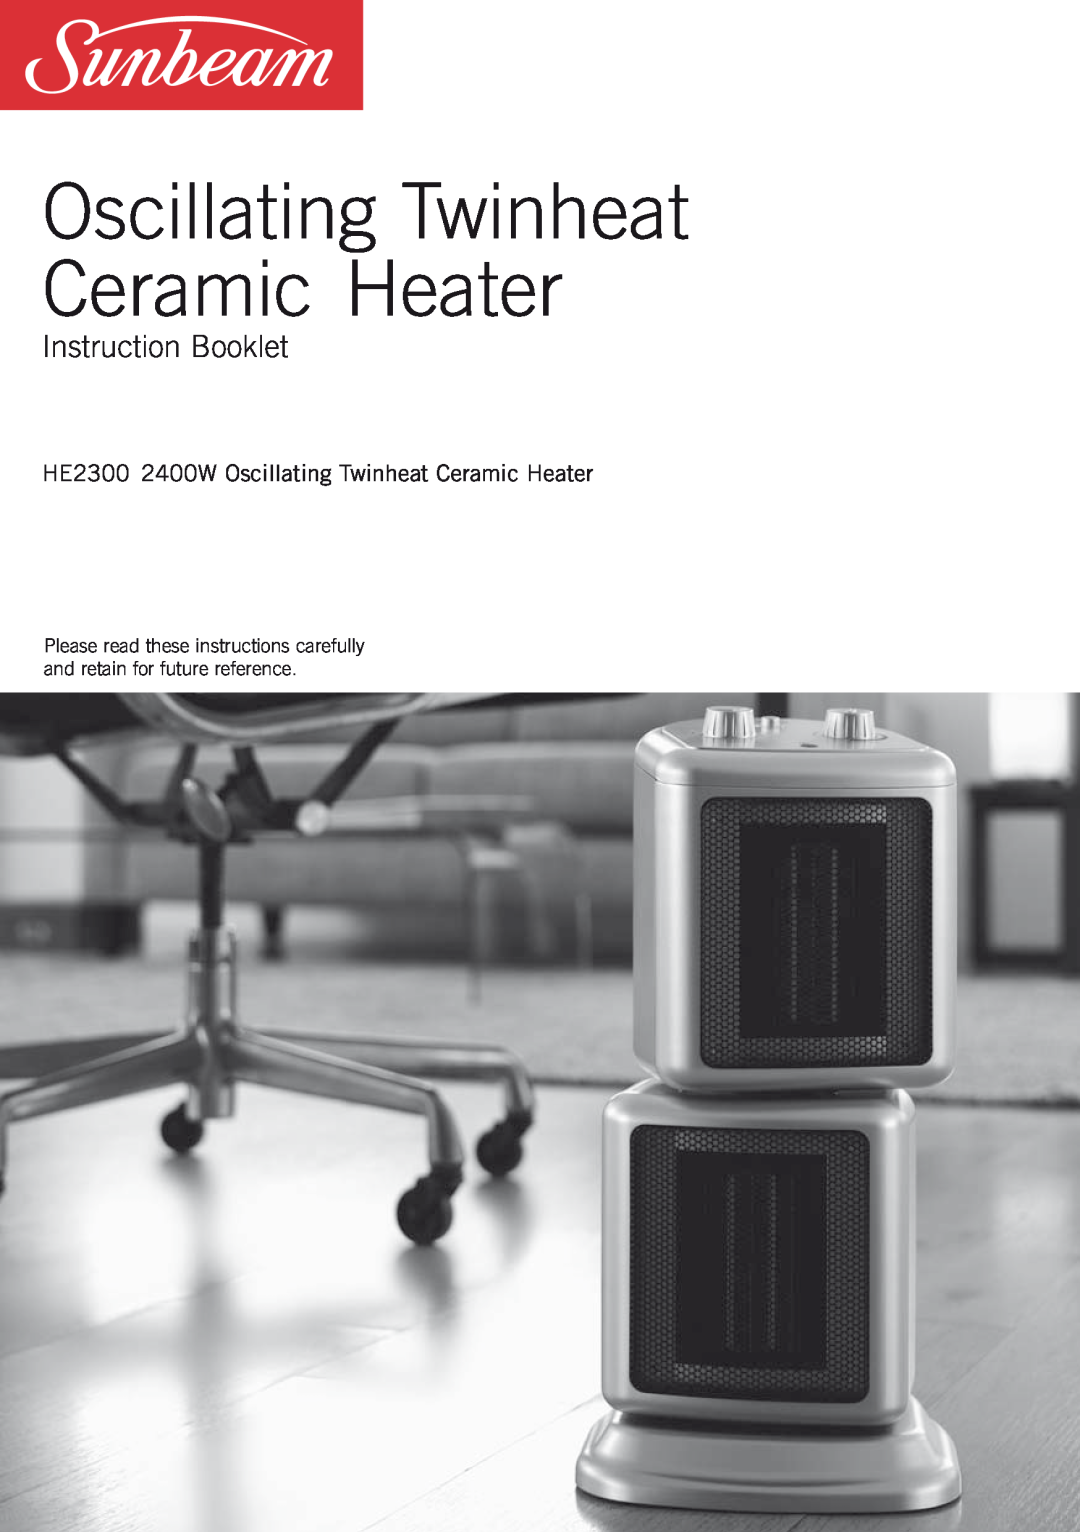 Sunbeam Bedding HE2300 manual Instruction Booklet, Oscillating Twinheat Ceramic Heater 